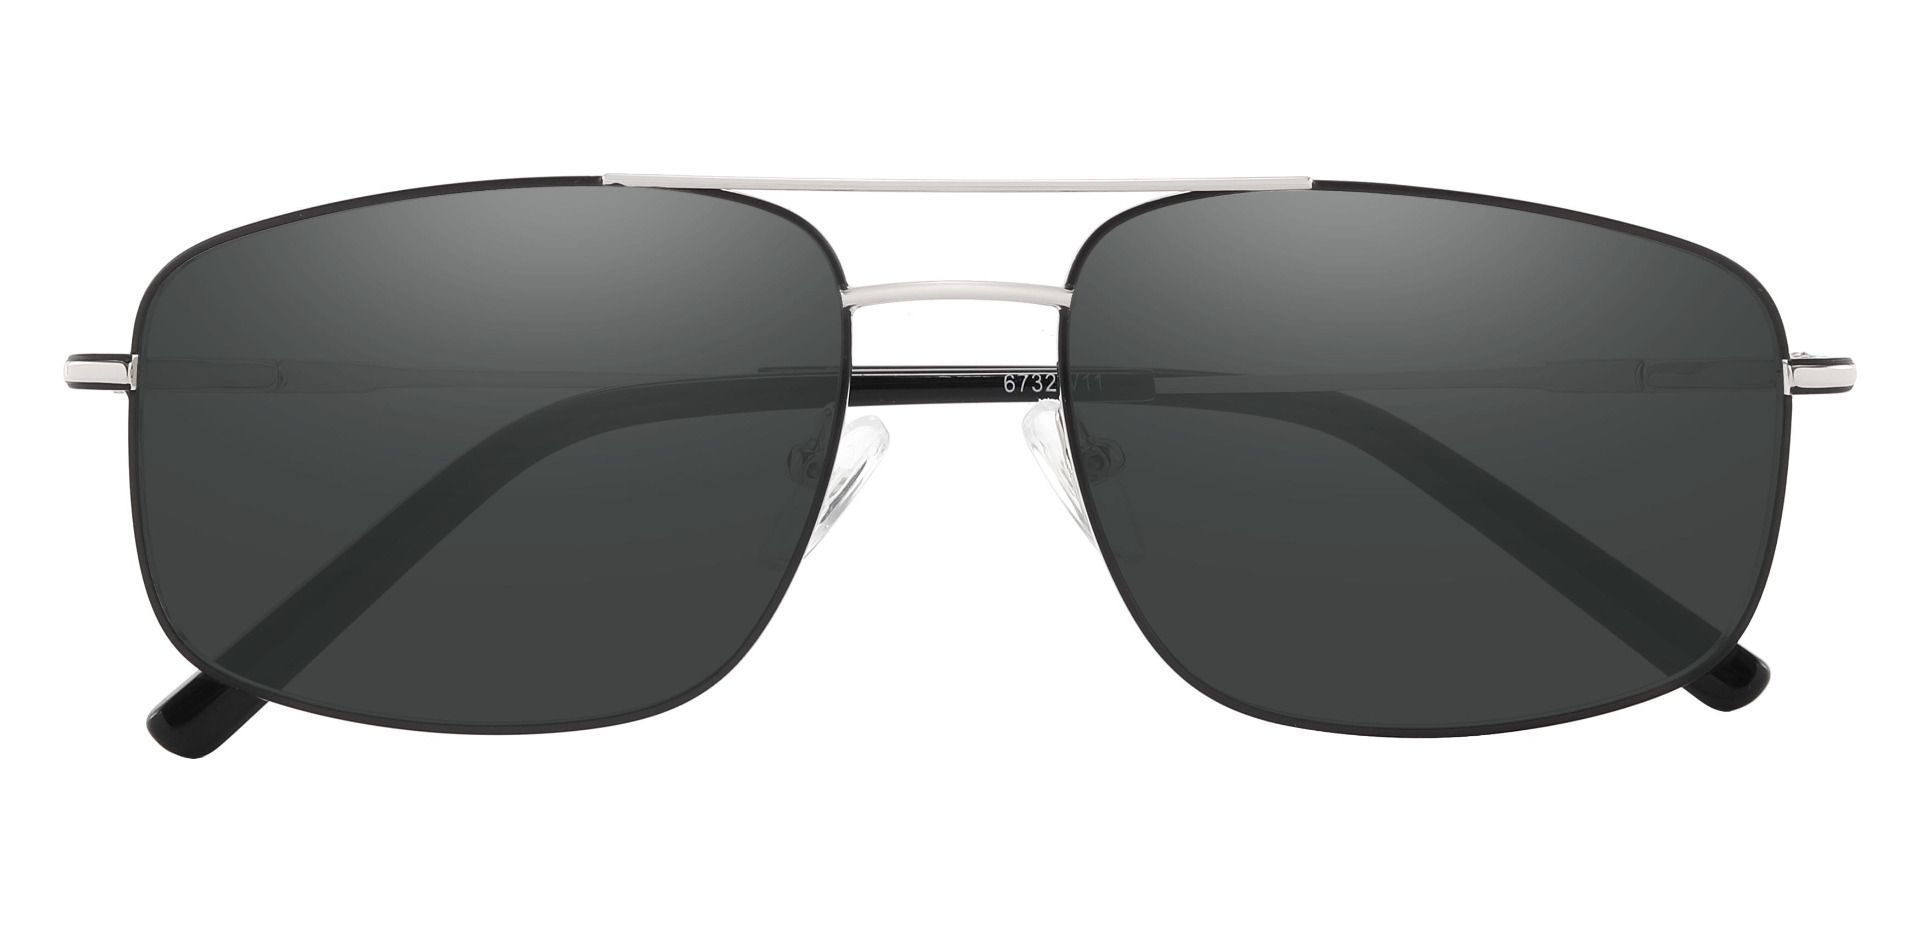 Turner Aviator Prescription Sunglasses - Silver Frame With Gray Lenses